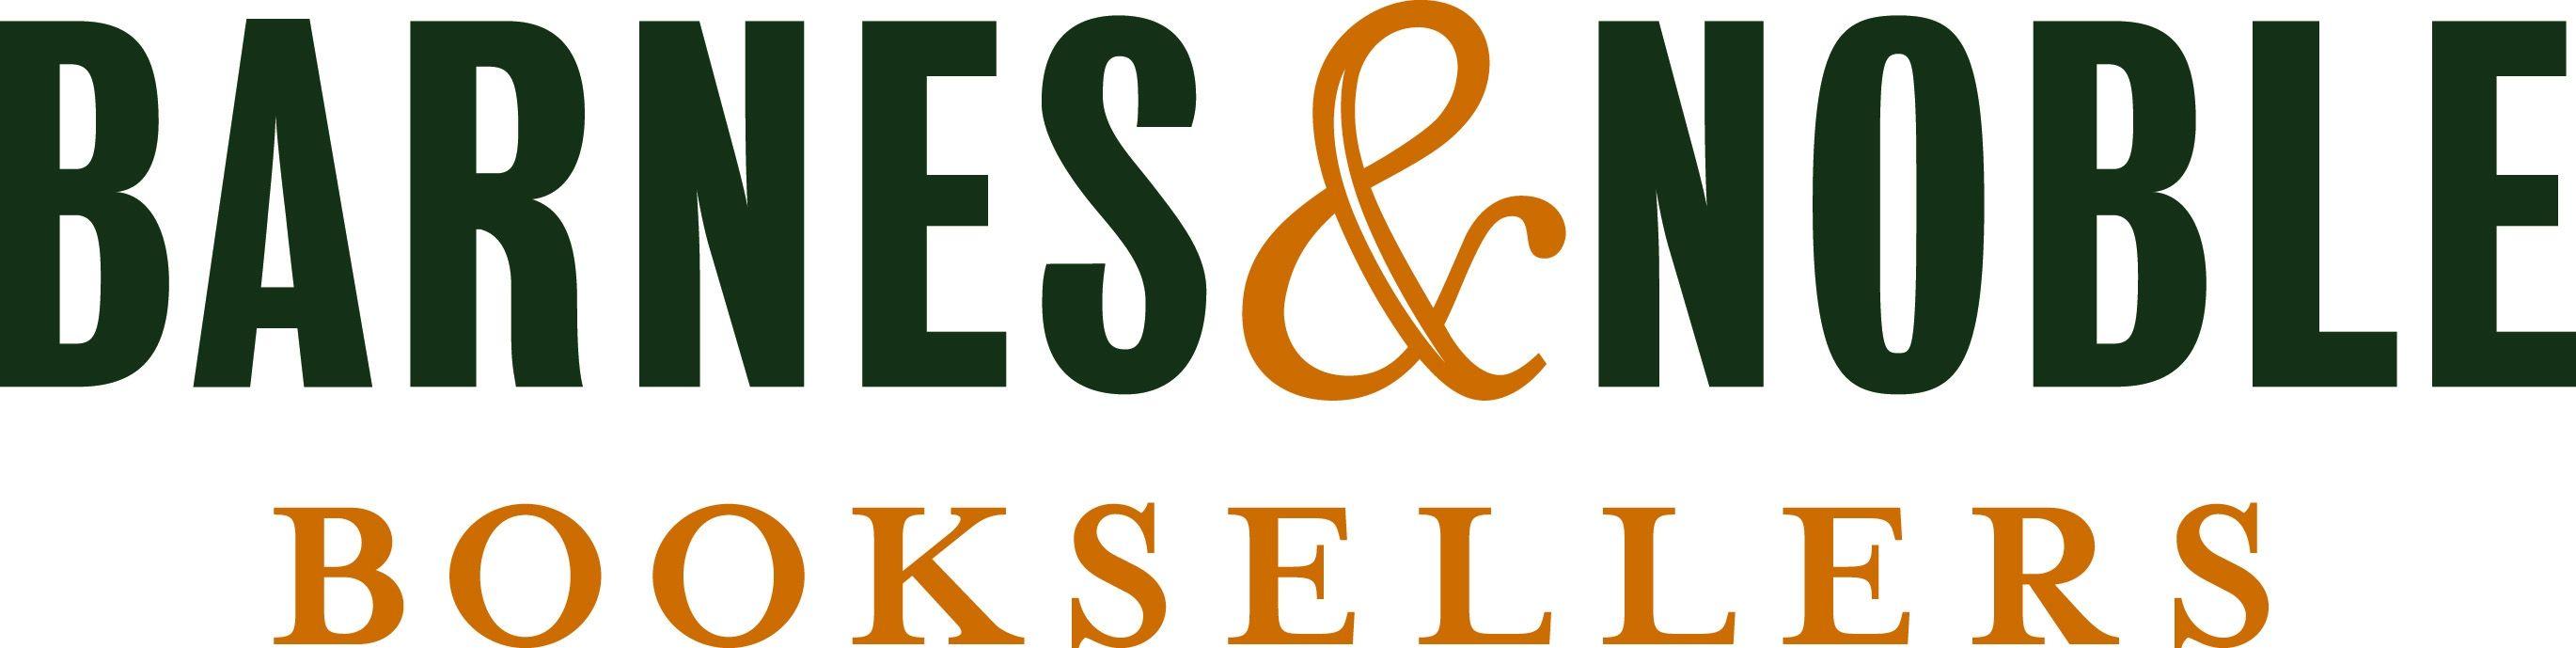 Barnes and Noble Nook Logo - Barnes and noble nook Logos